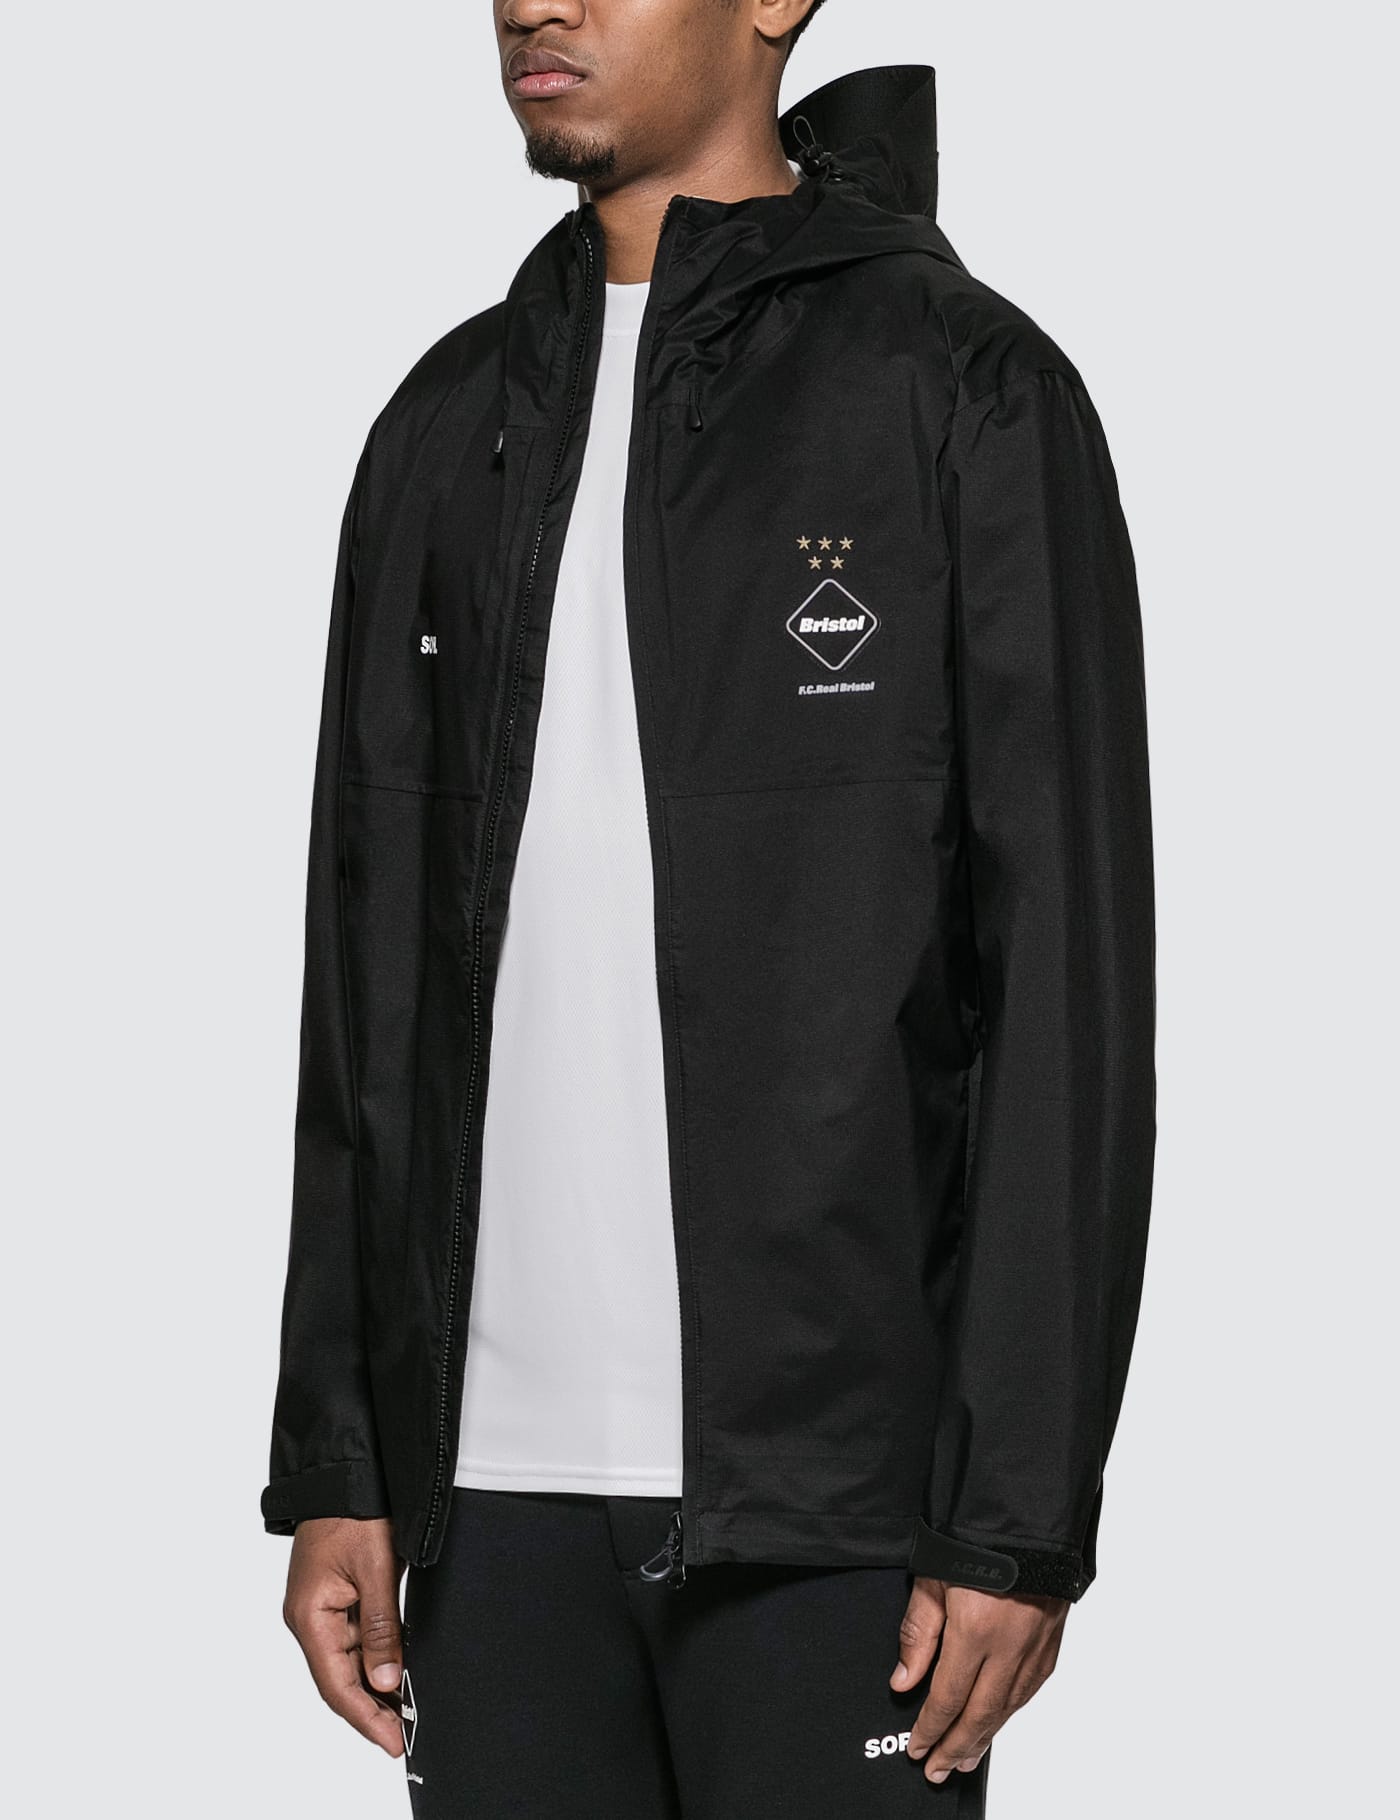 F.C. Real Bristol - Rain Jacket | HBX - Globally Curated Fashion 